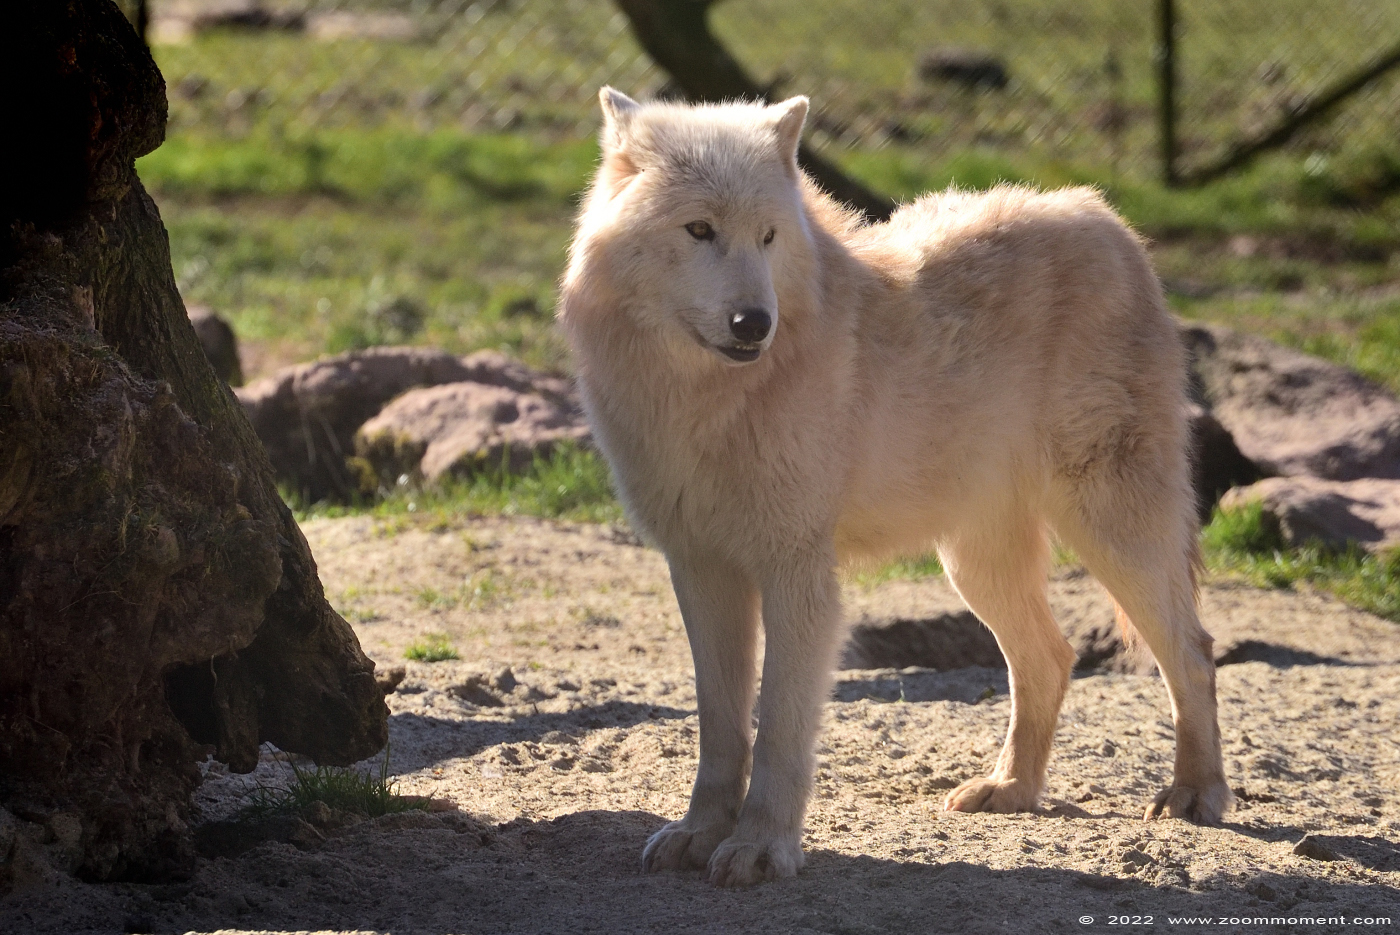 Witte wolf ( Canis lupus ) polar wolf
Ключові слова: Monde Sauvage Belgium Witte wolf Canis lupus polar wolf